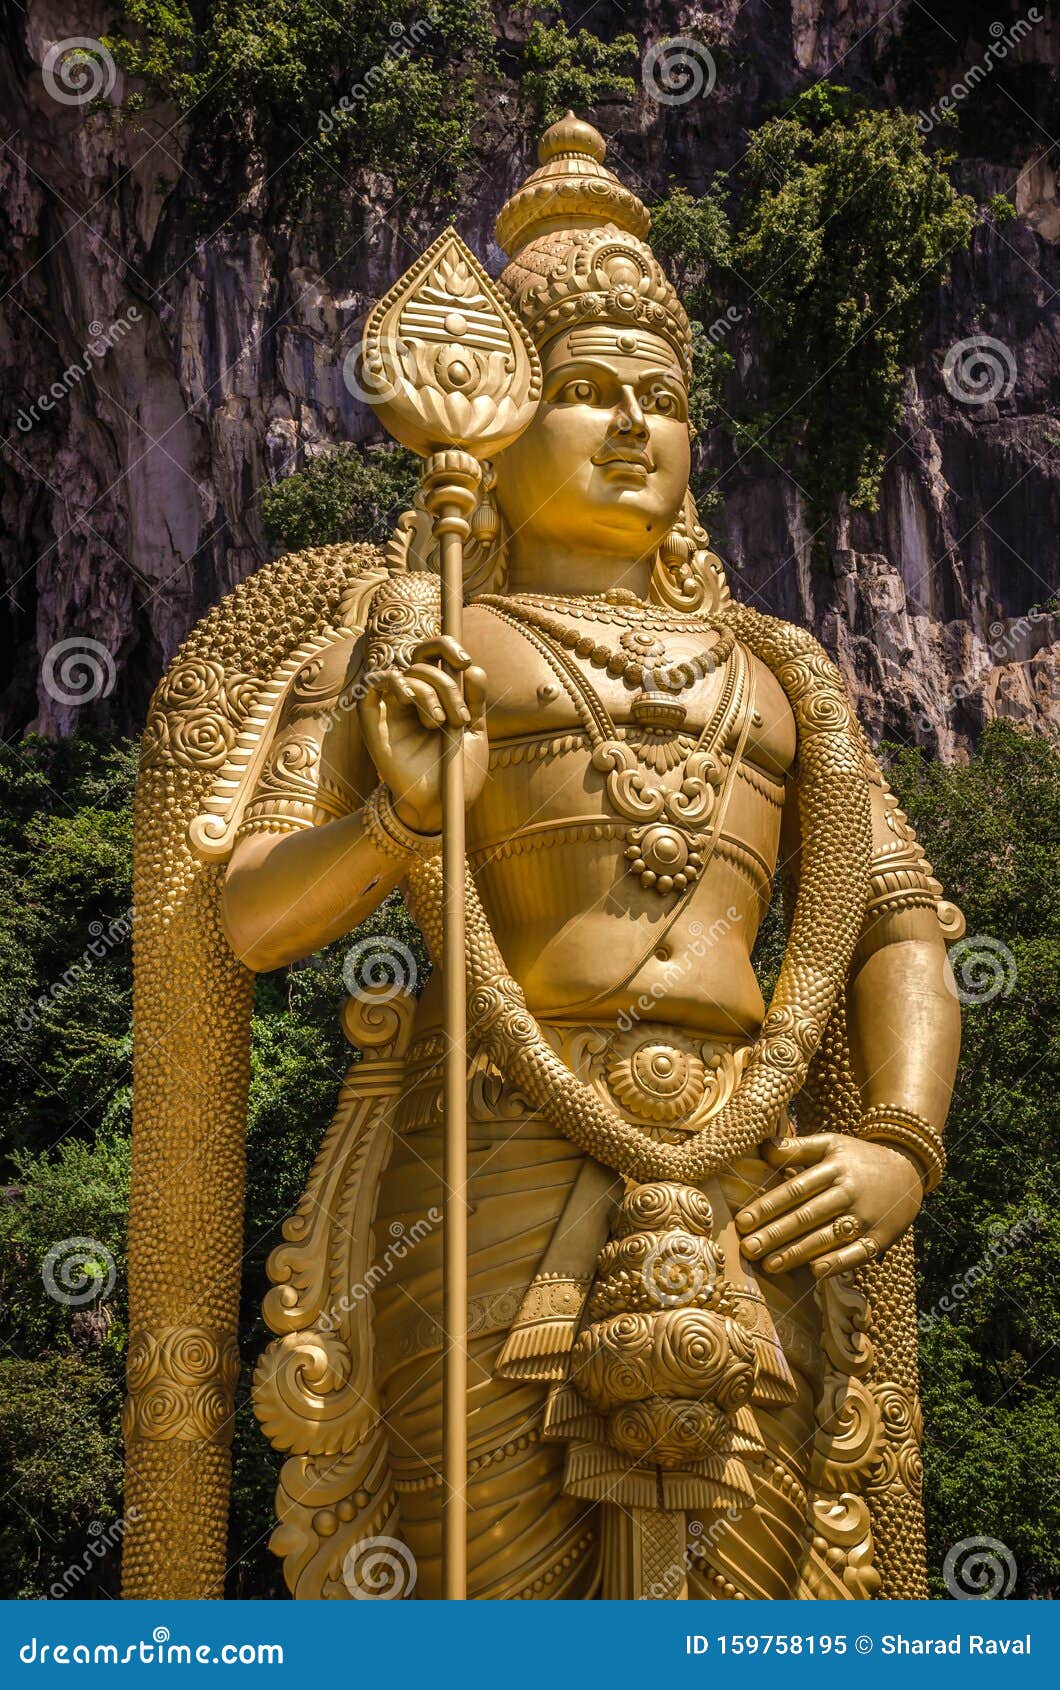 Lord Murugan`s Statue Near Batu Cave, Malaysia Editorial Image ...